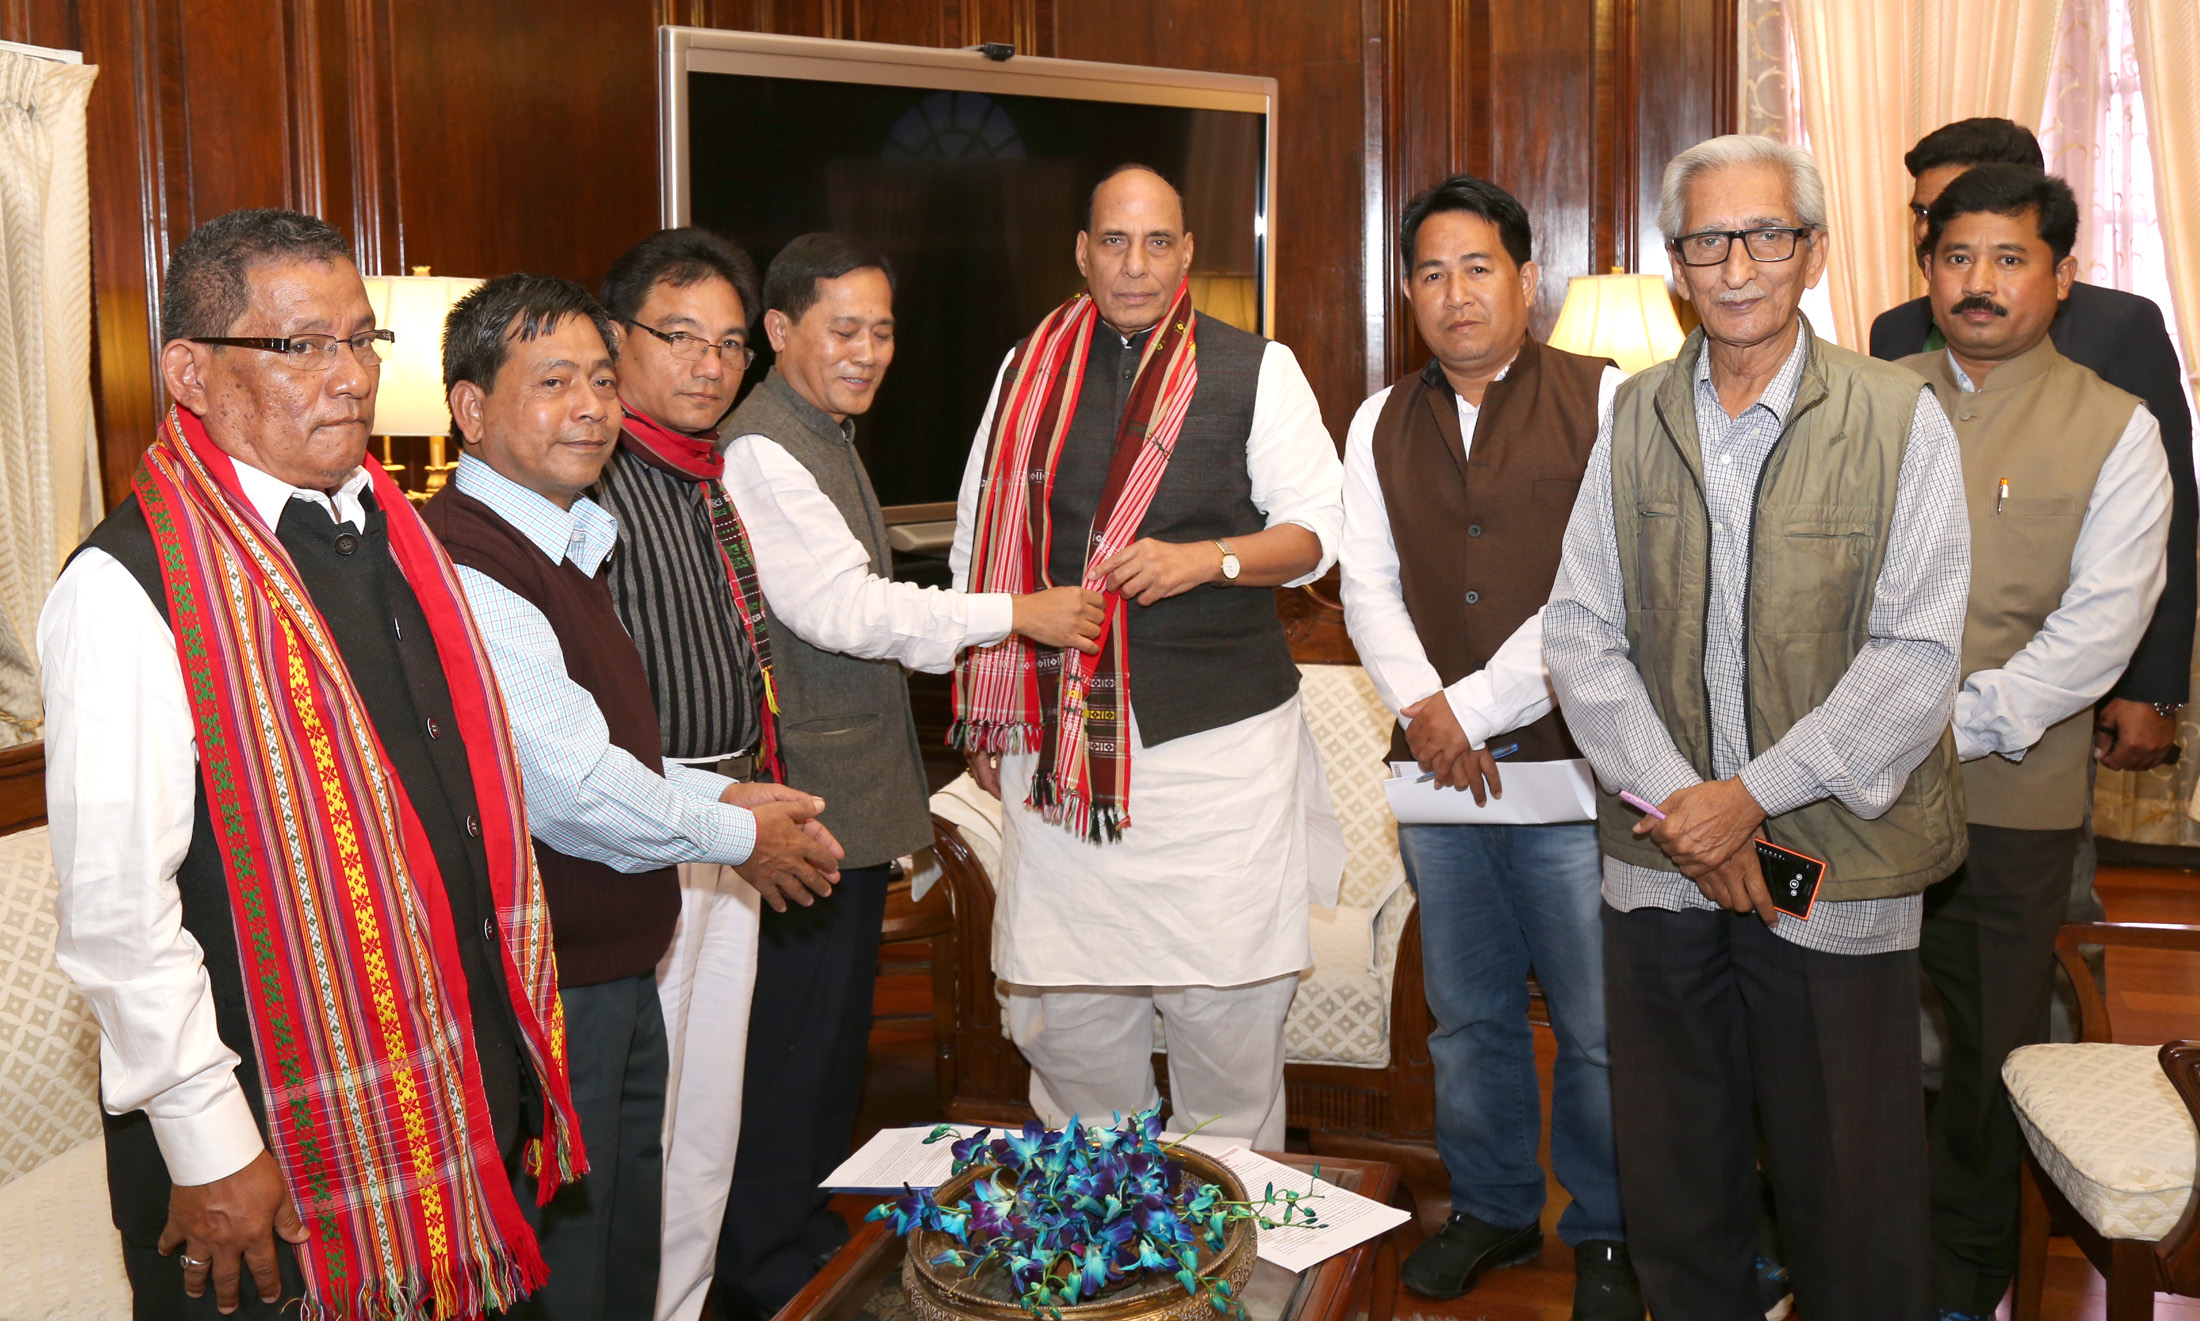 A delegation from Tripura led by Shri Jitendra Chaudhury, MP (Lok Sabha), calling on the Union Home Minister, Shri Rajnath Singh, in New Delhi on Thursday, November 24, 2016.